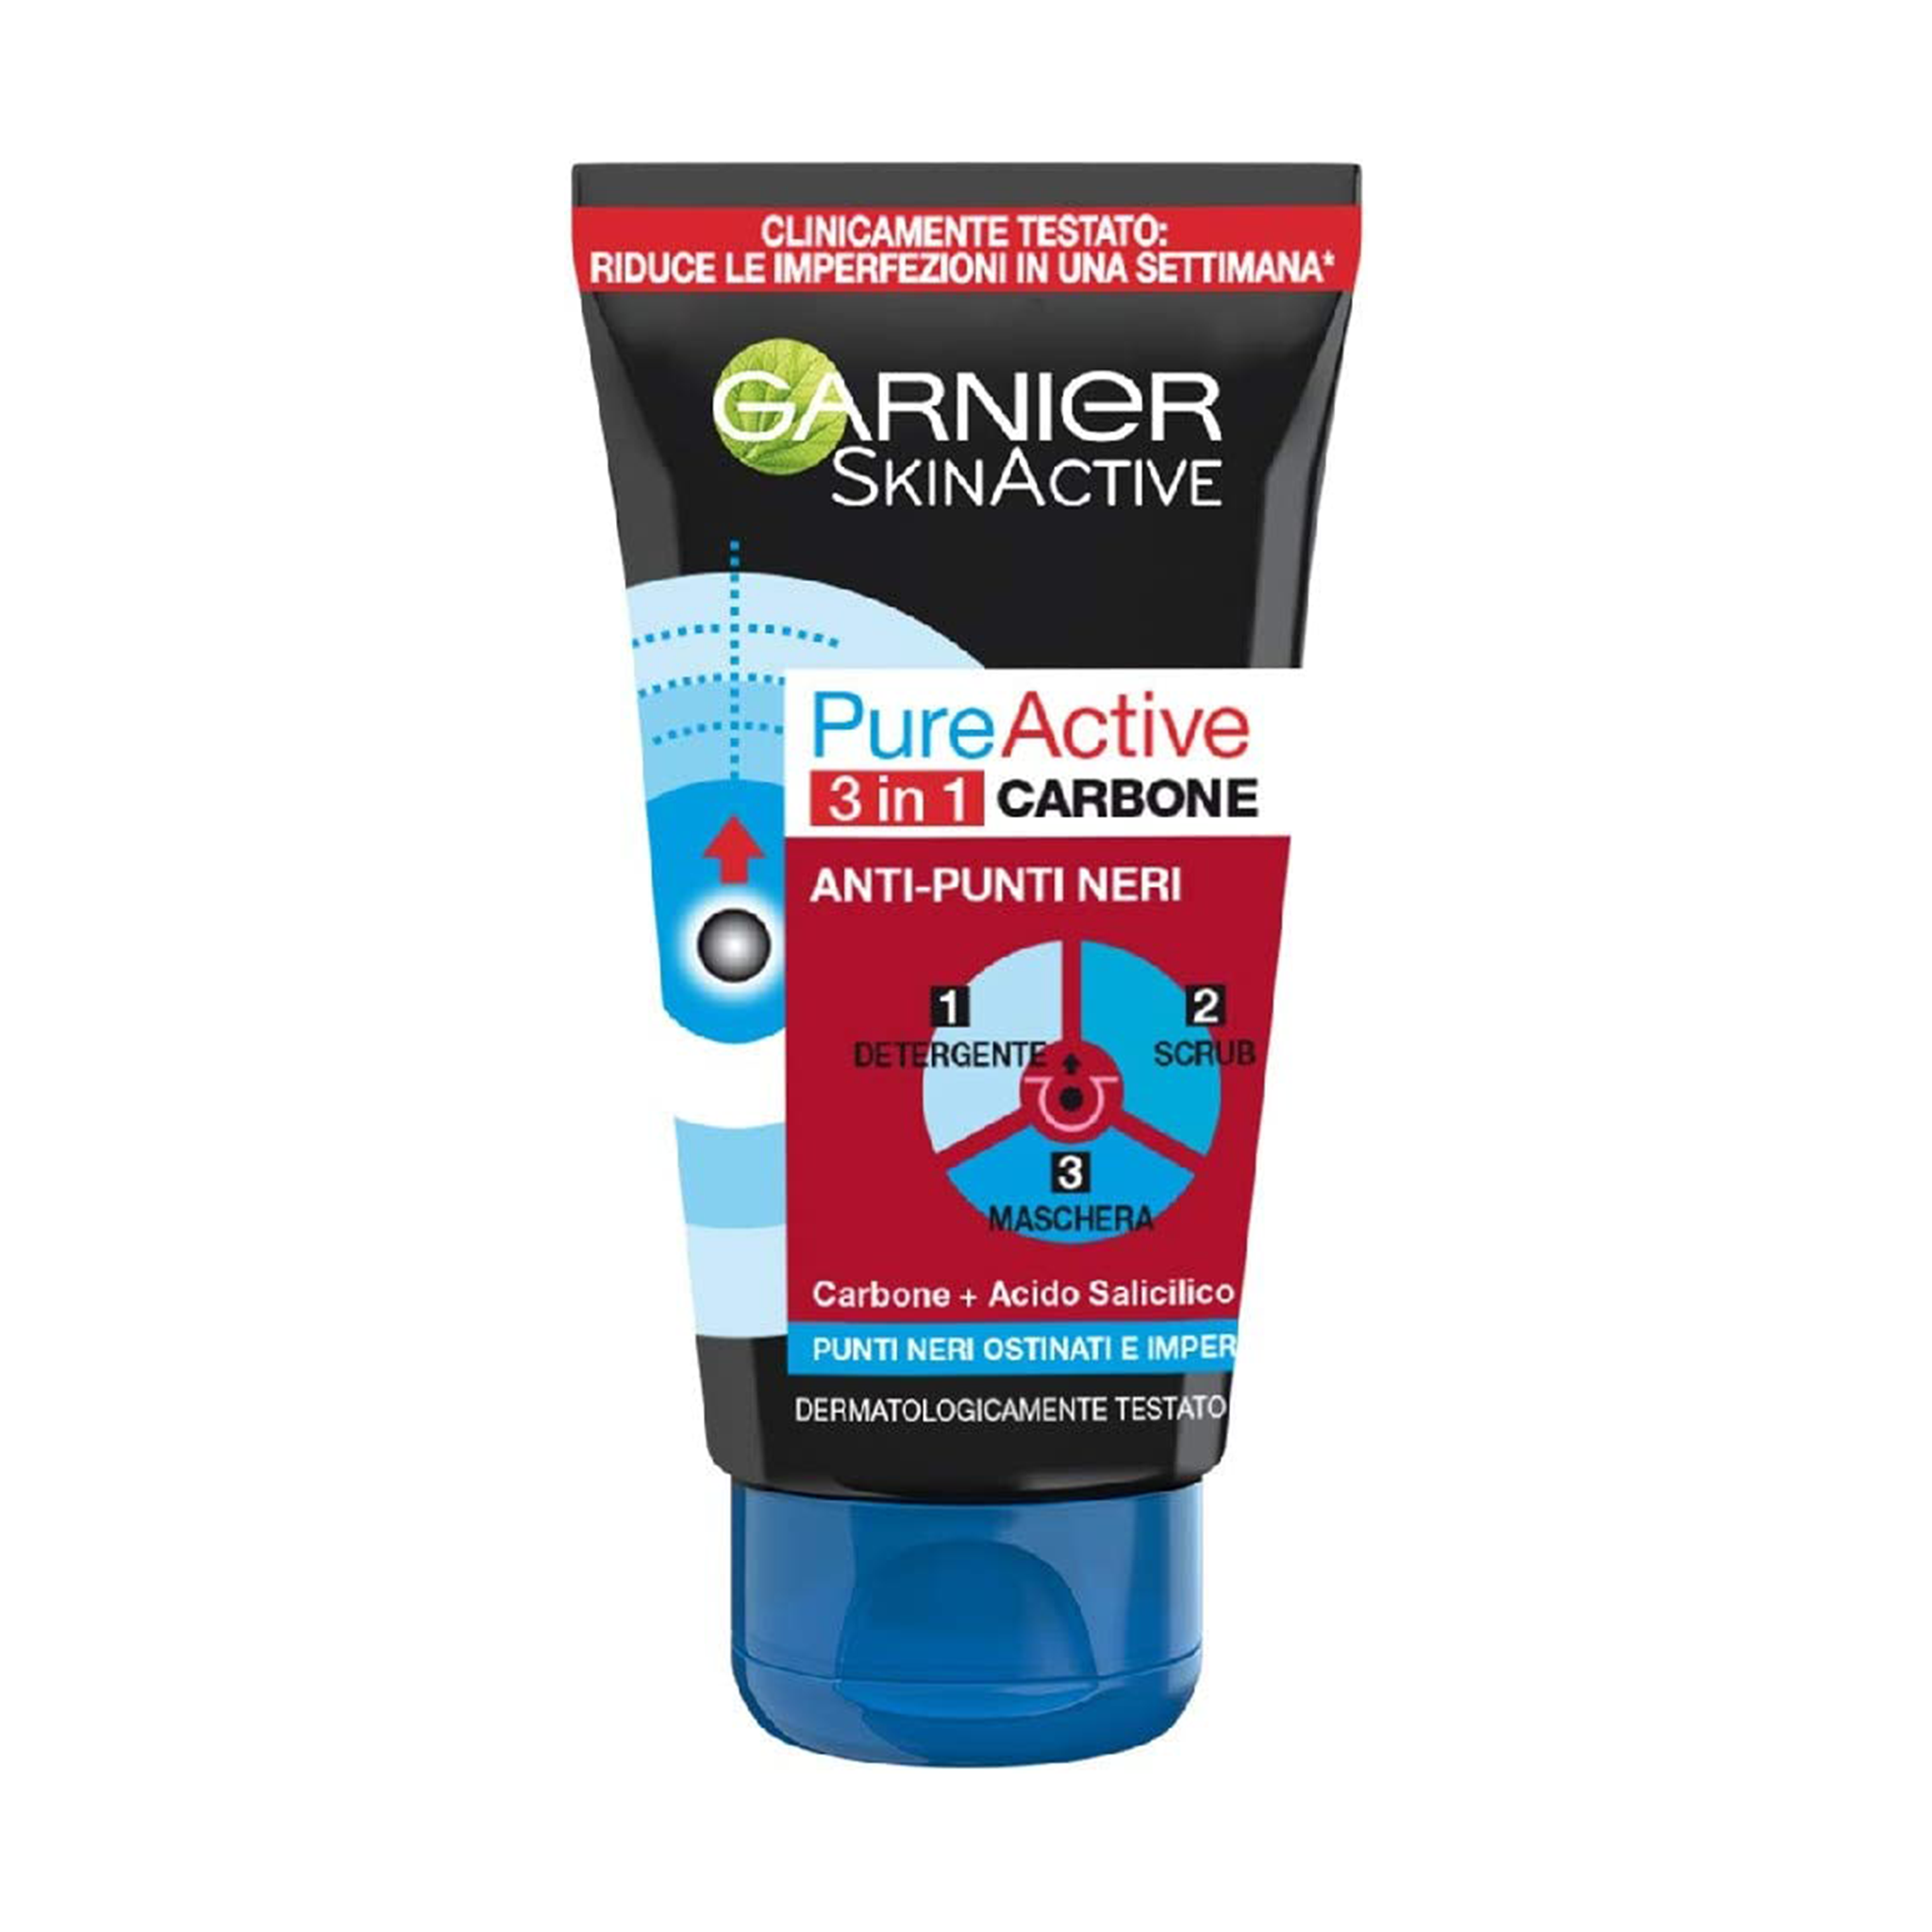 Garnier Skin Active Anti-Punti Neri 3in1 Carbone